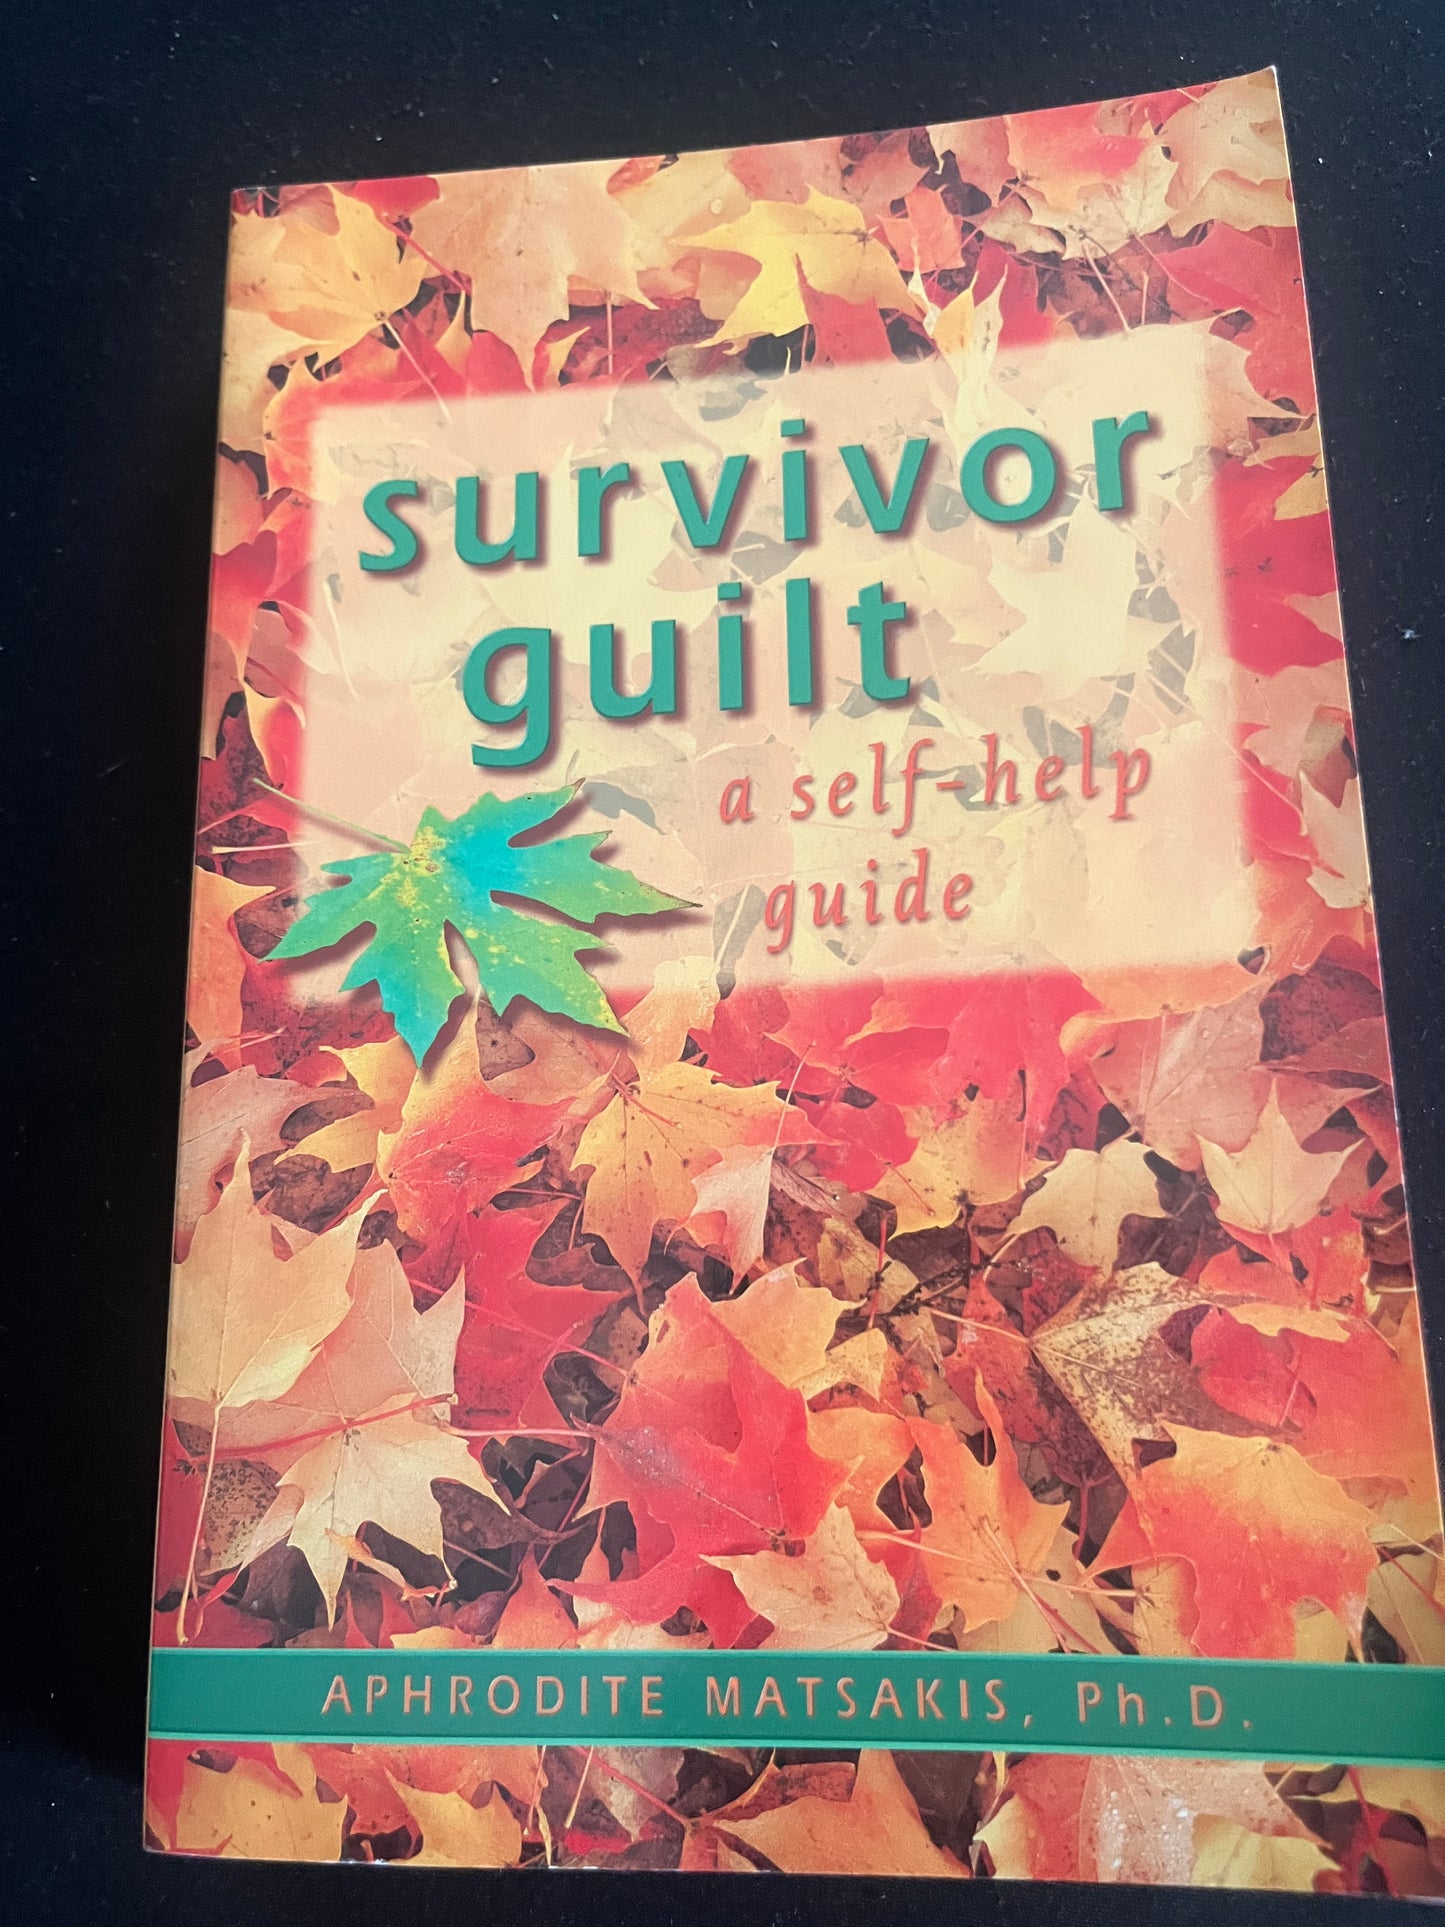 SURVIVOR GUILT: A Self-Help Guide by Aphrodite Matsakis